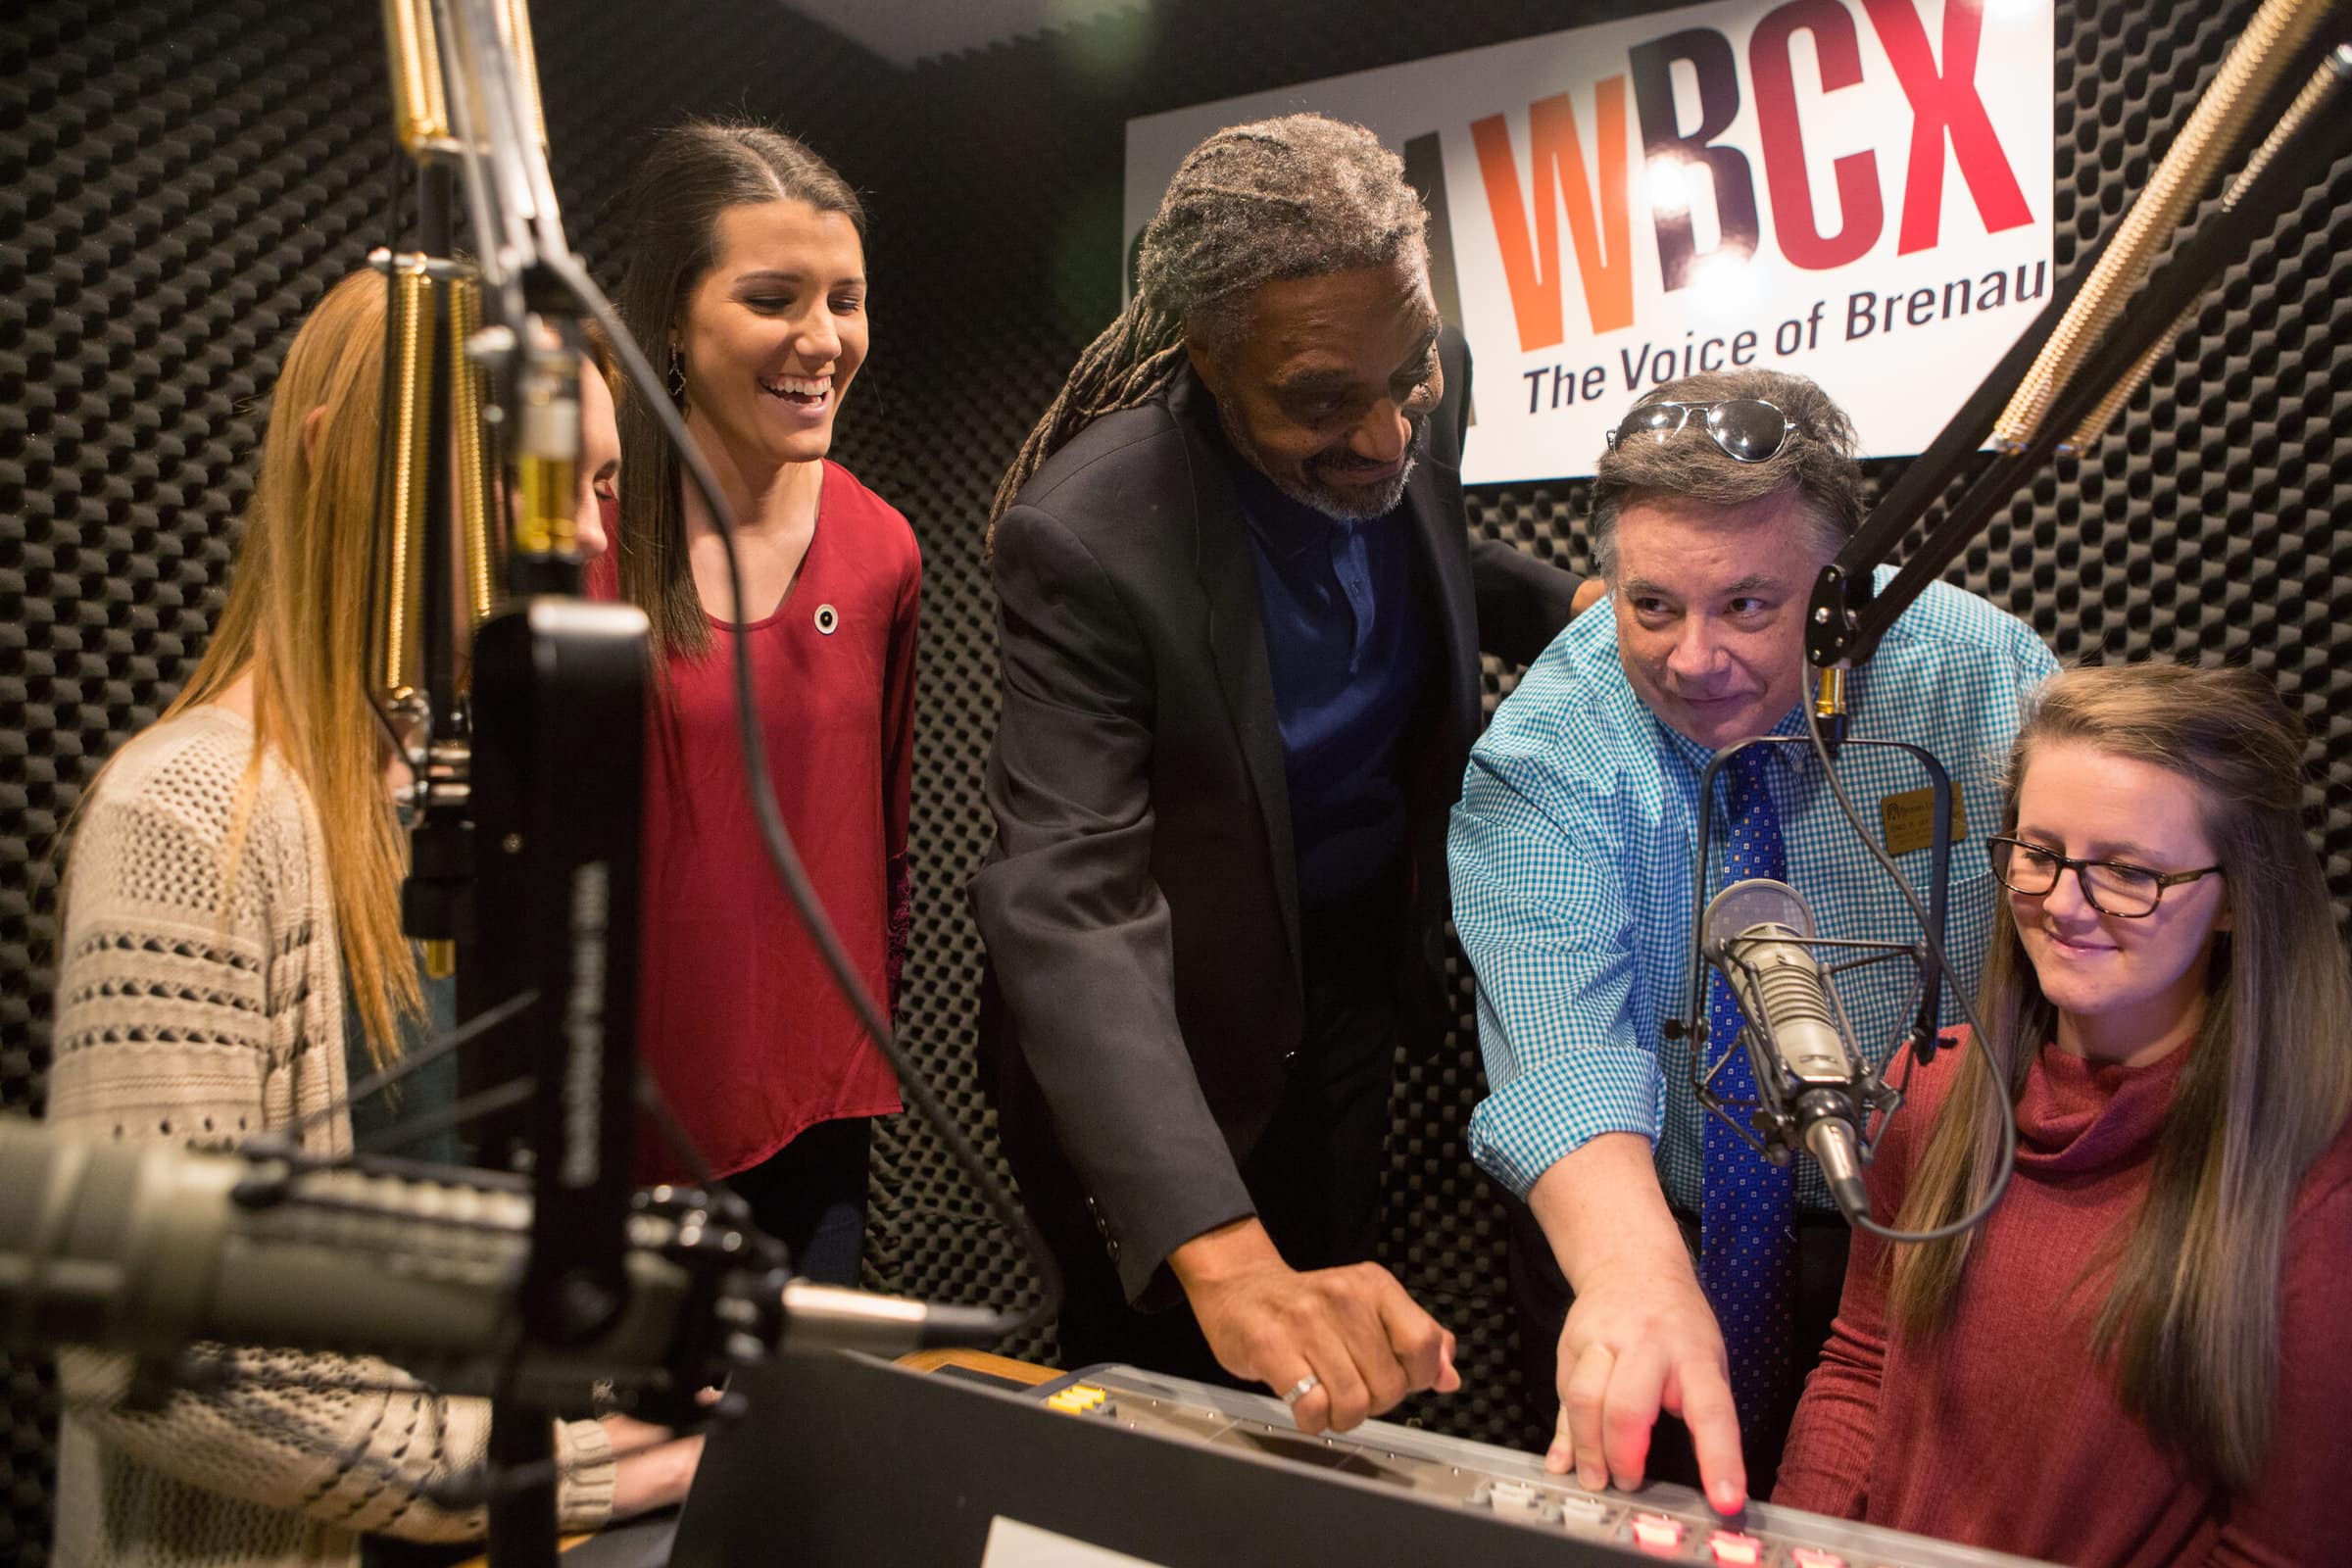 WBCX radio station